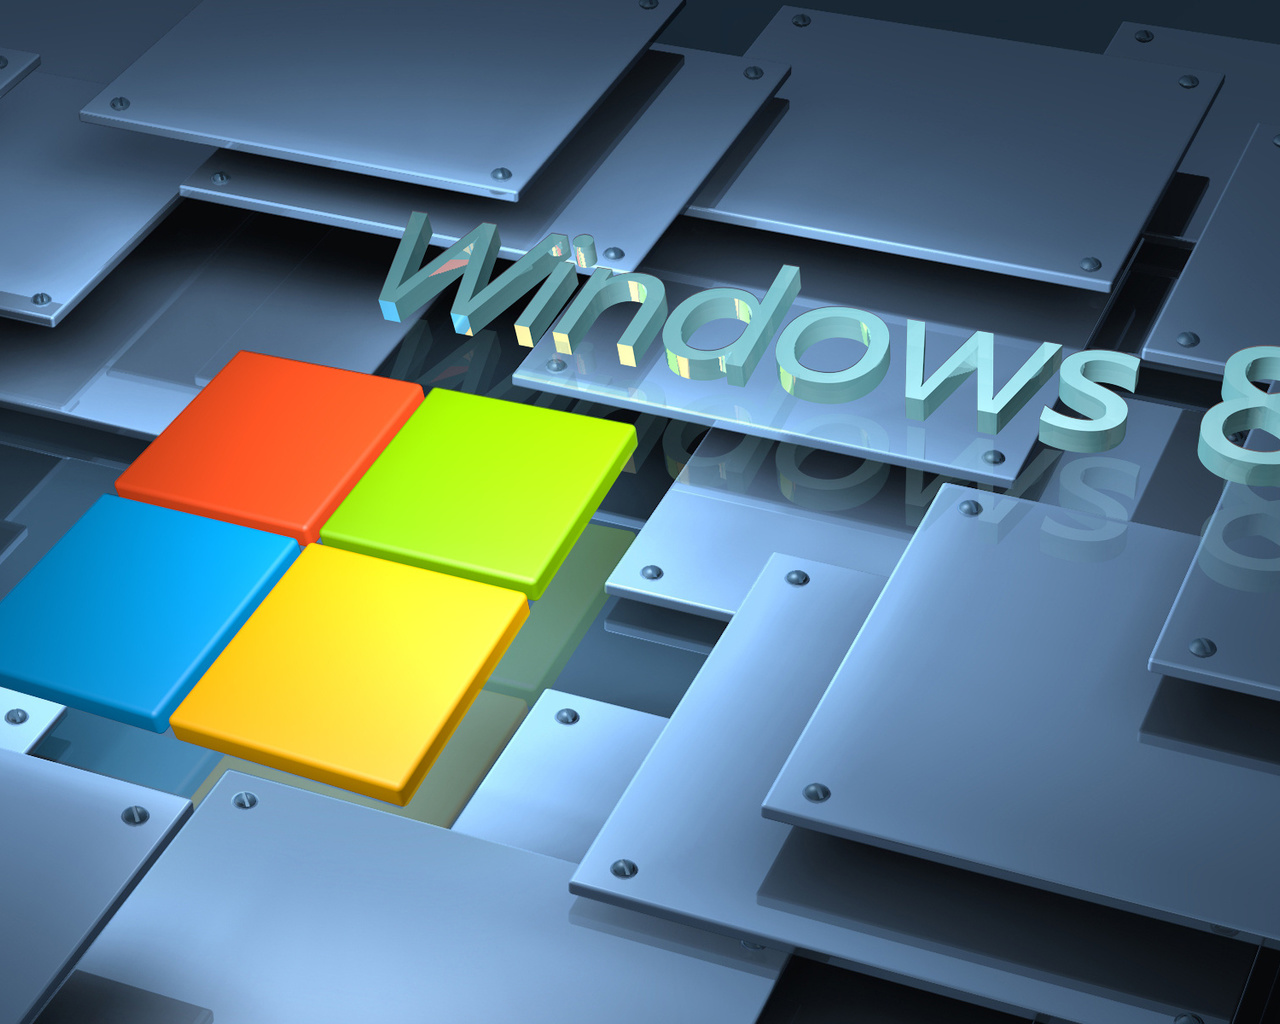 windows 8, microsoft, logo, , windows